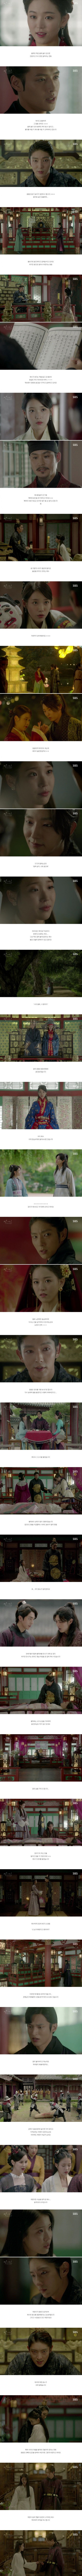 episode 18 captures for the Korean drama 'Scarlet Heart: Ryeo'